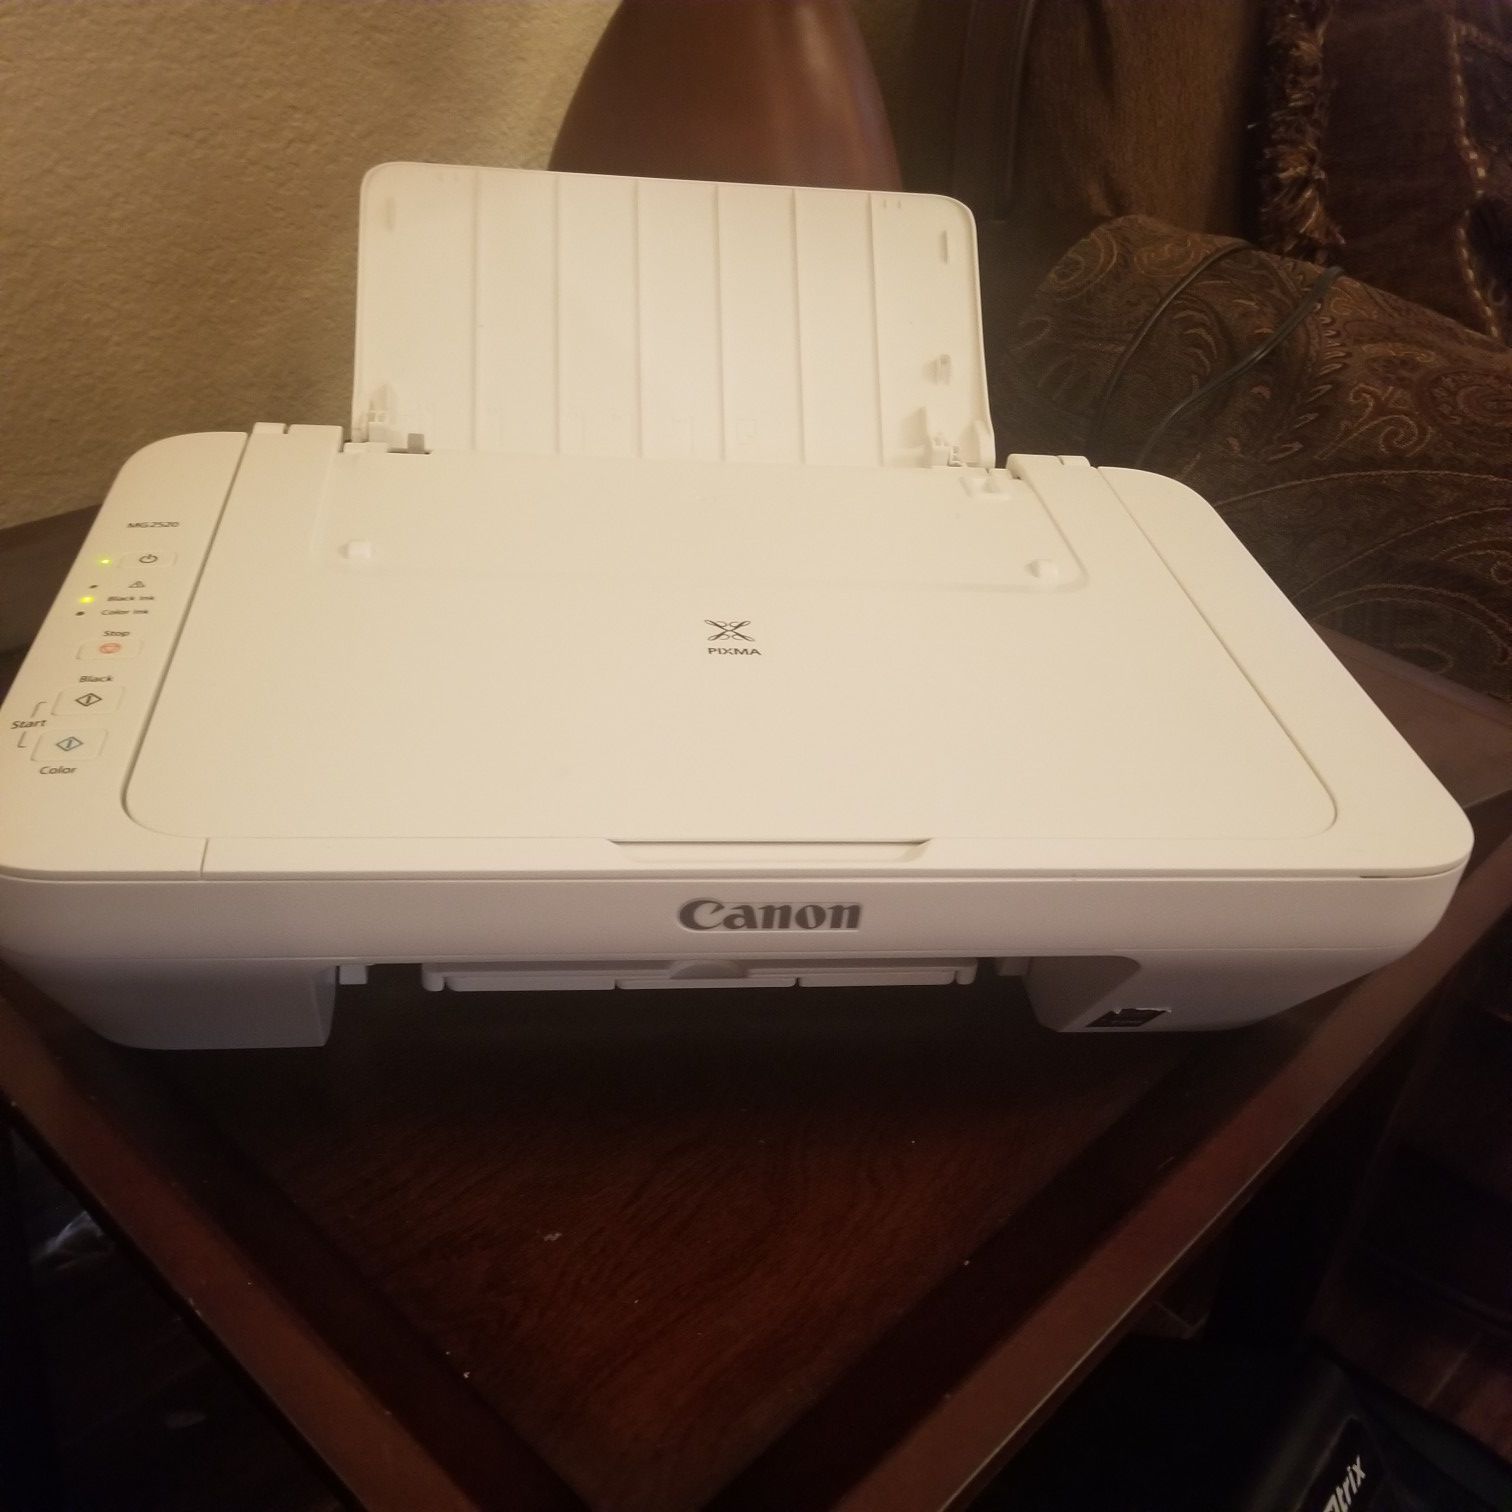 Canon printer/ scanner